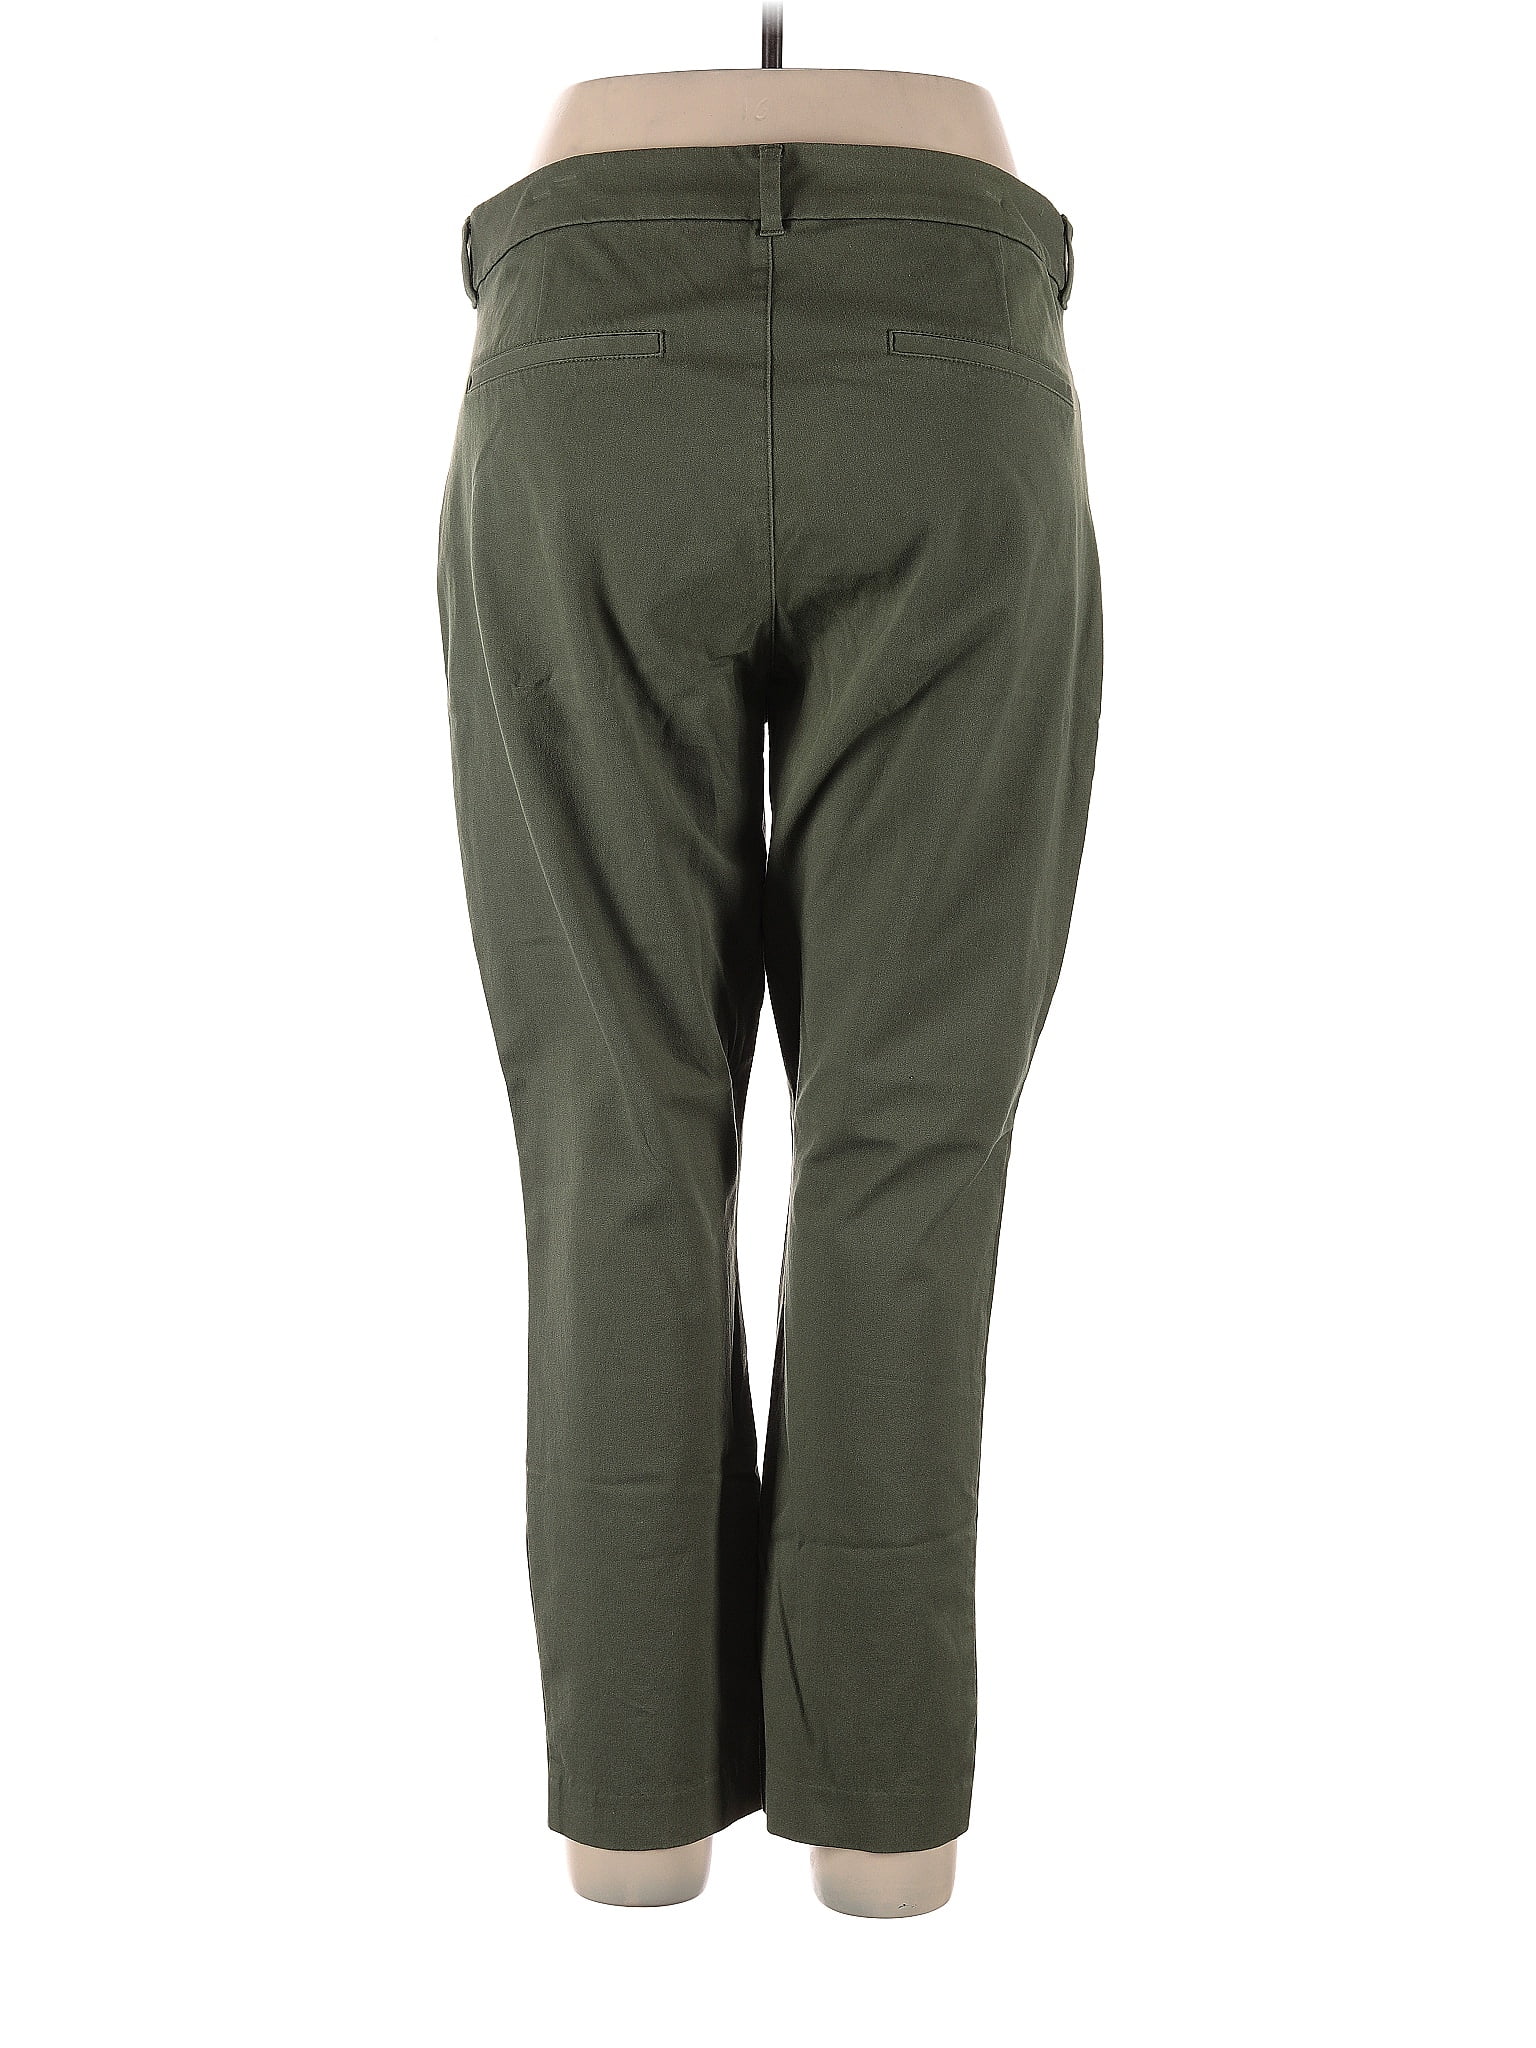 Tek Gear Green Active Pants Size 1X (Plus) - 48% off